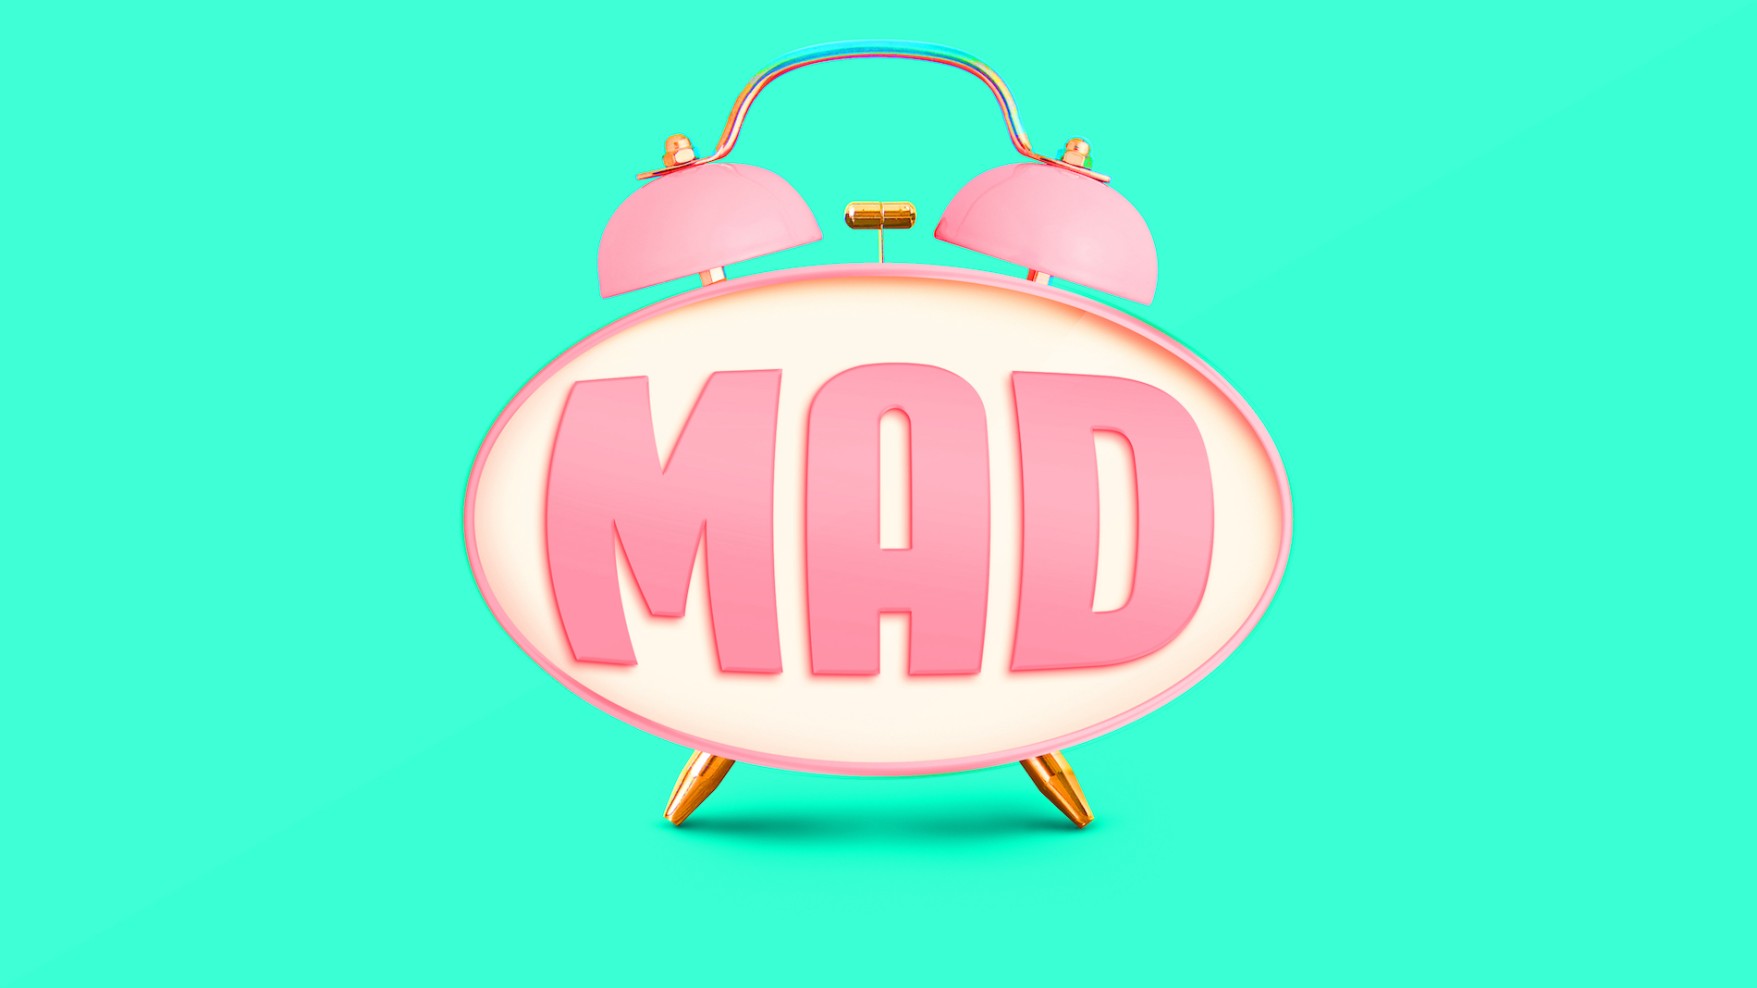  mad-image-4-tY0i3